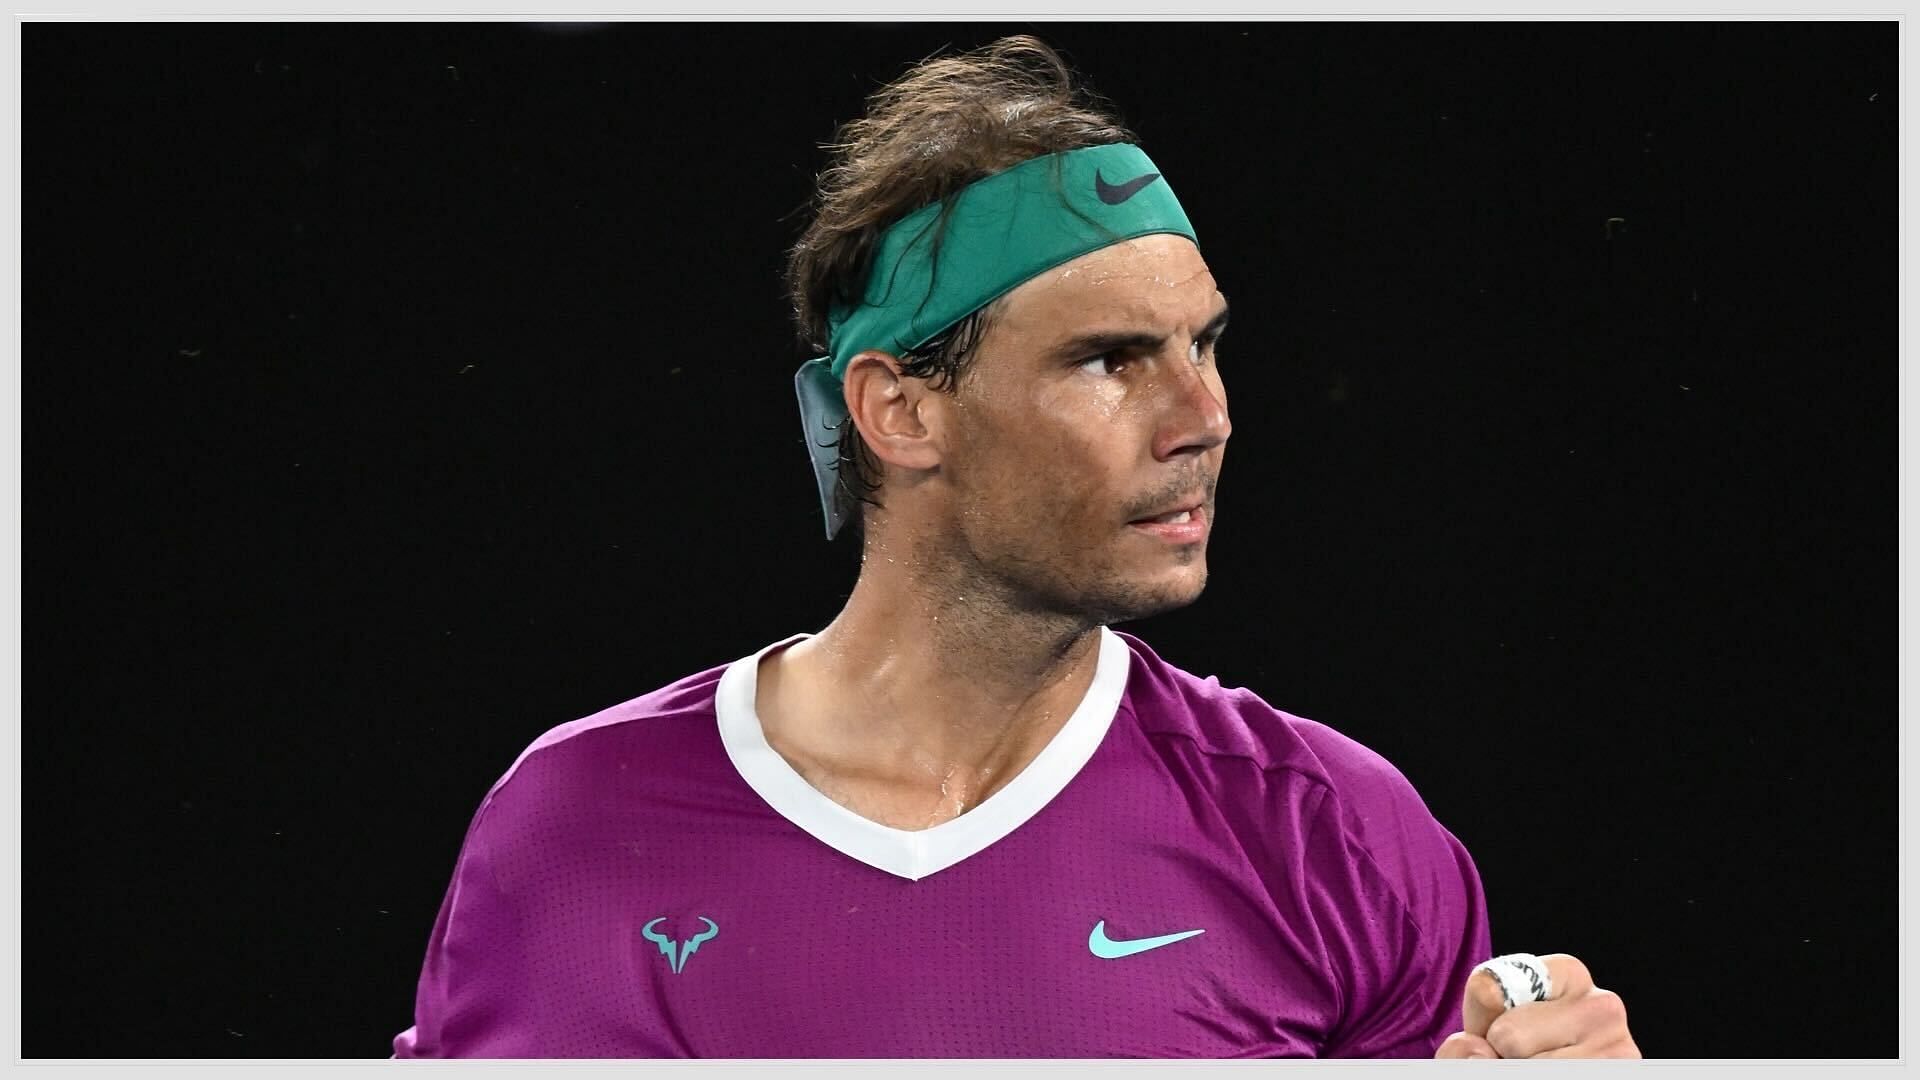 A look into Rafael Nadal